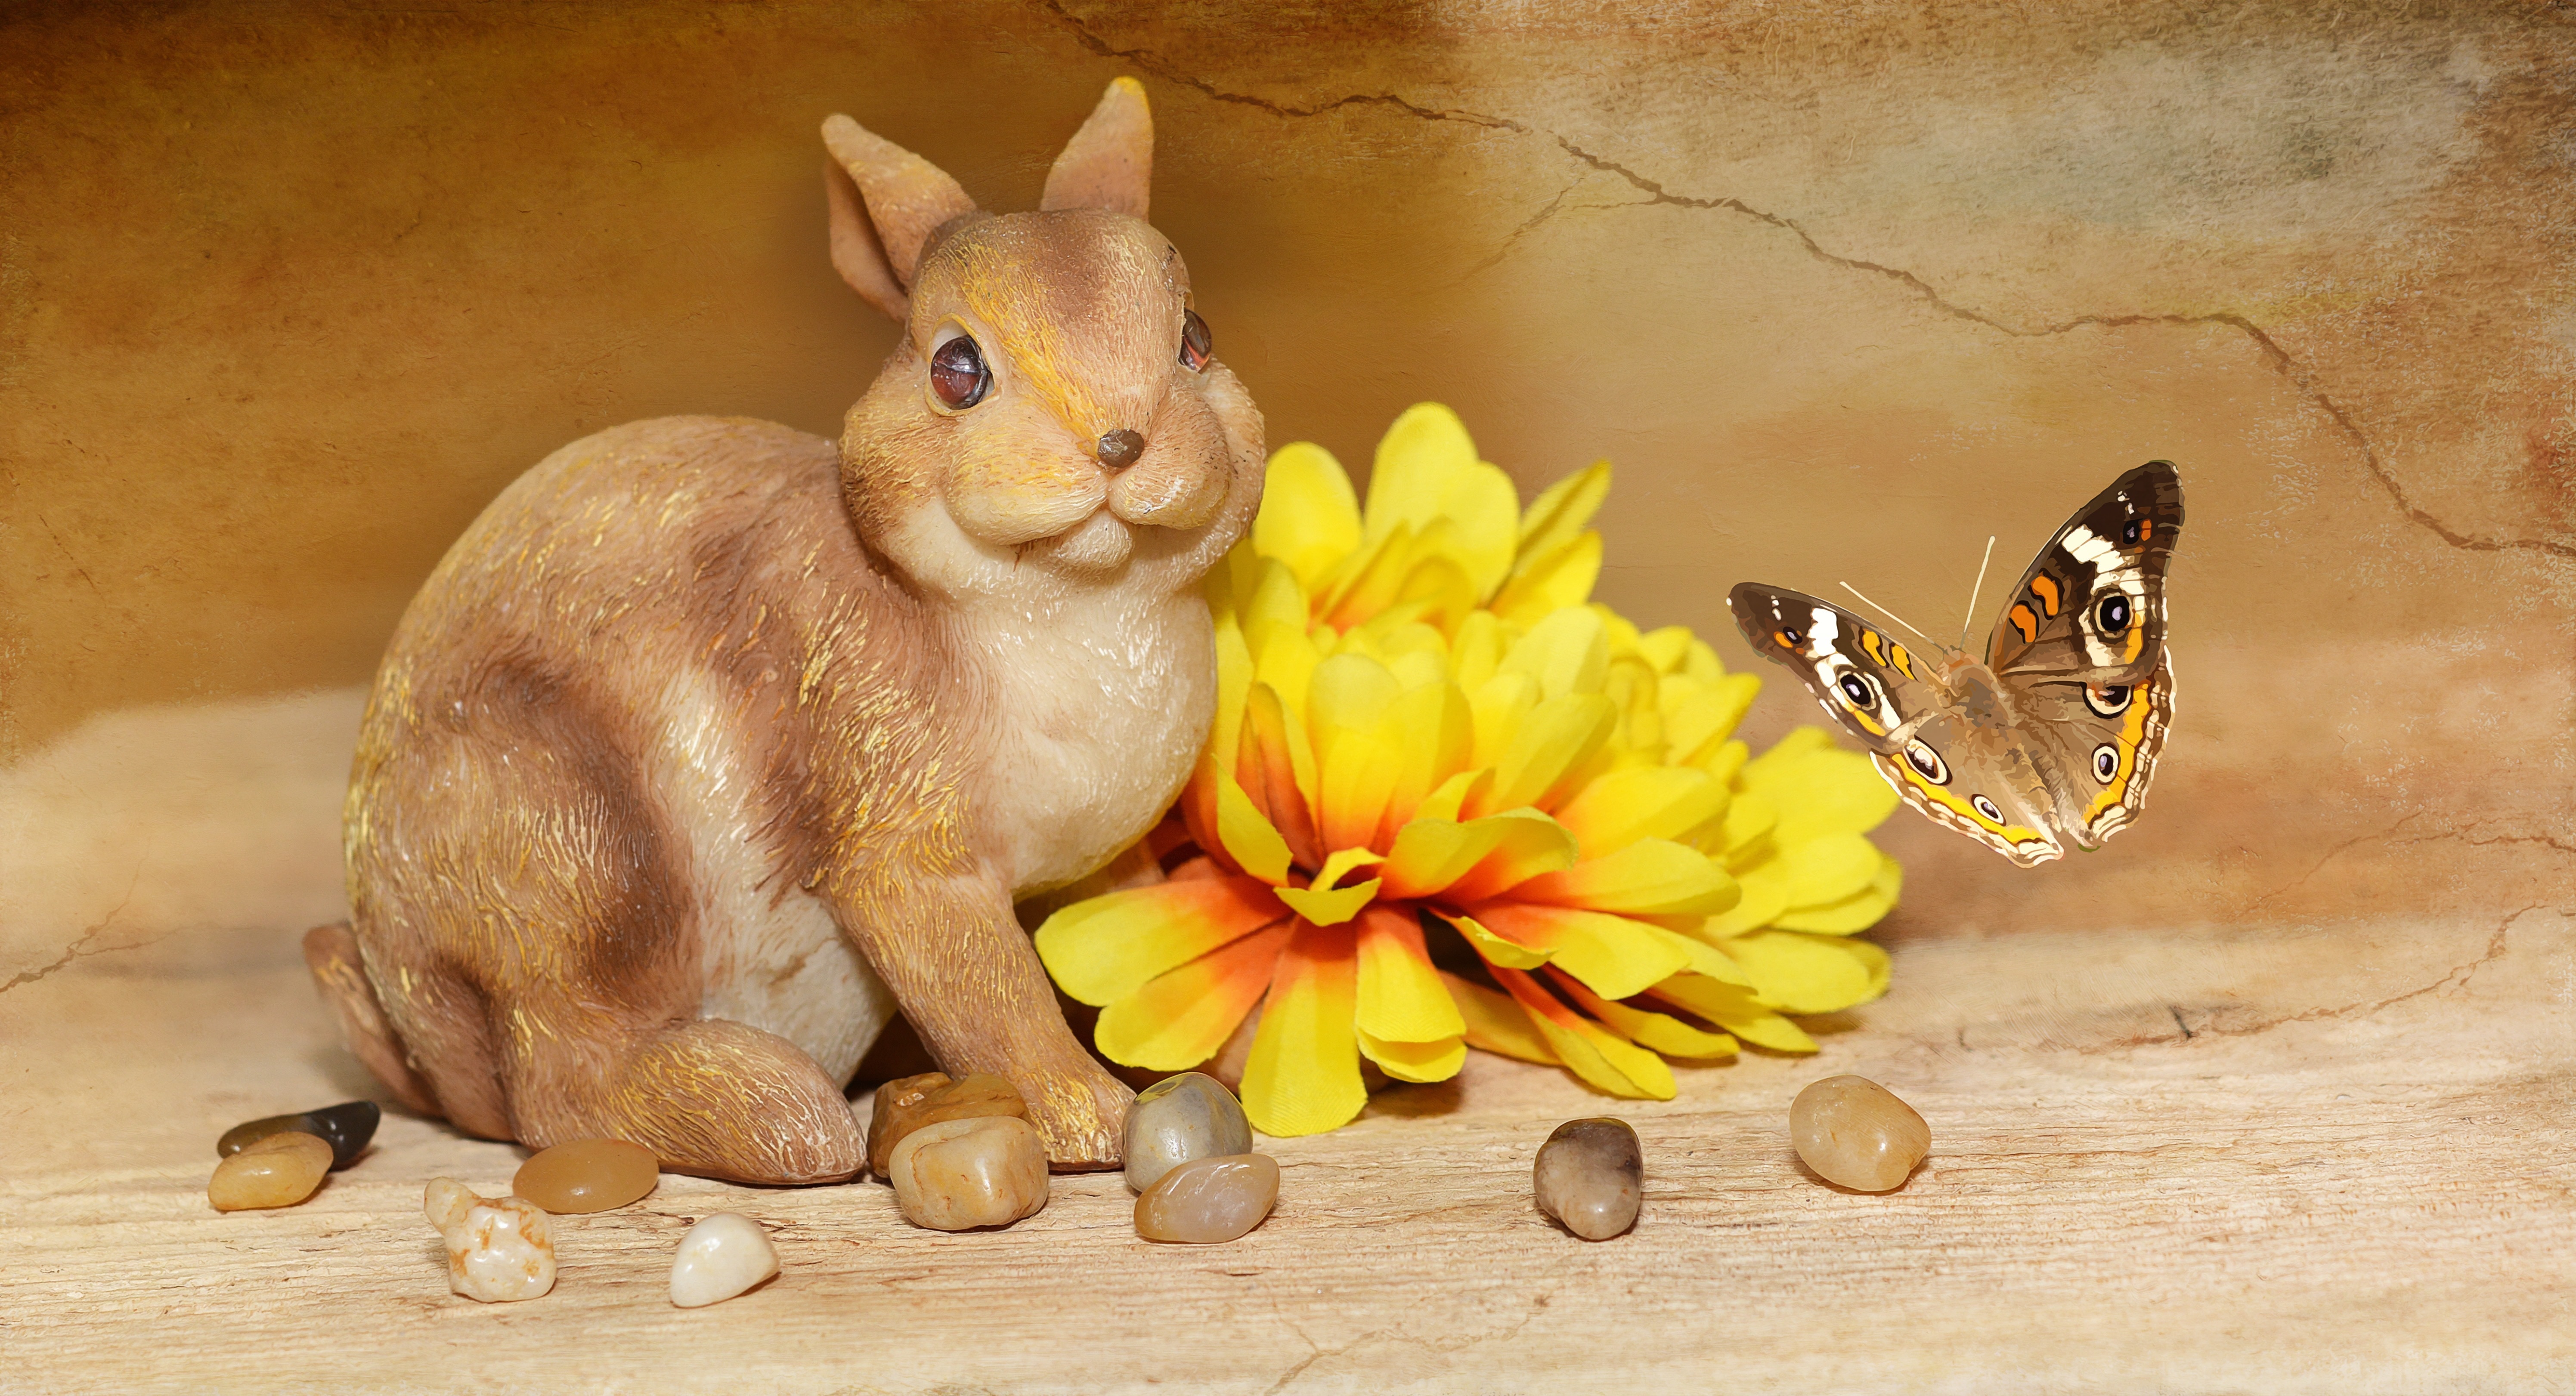 brown and beige ceramic rabbit figurine